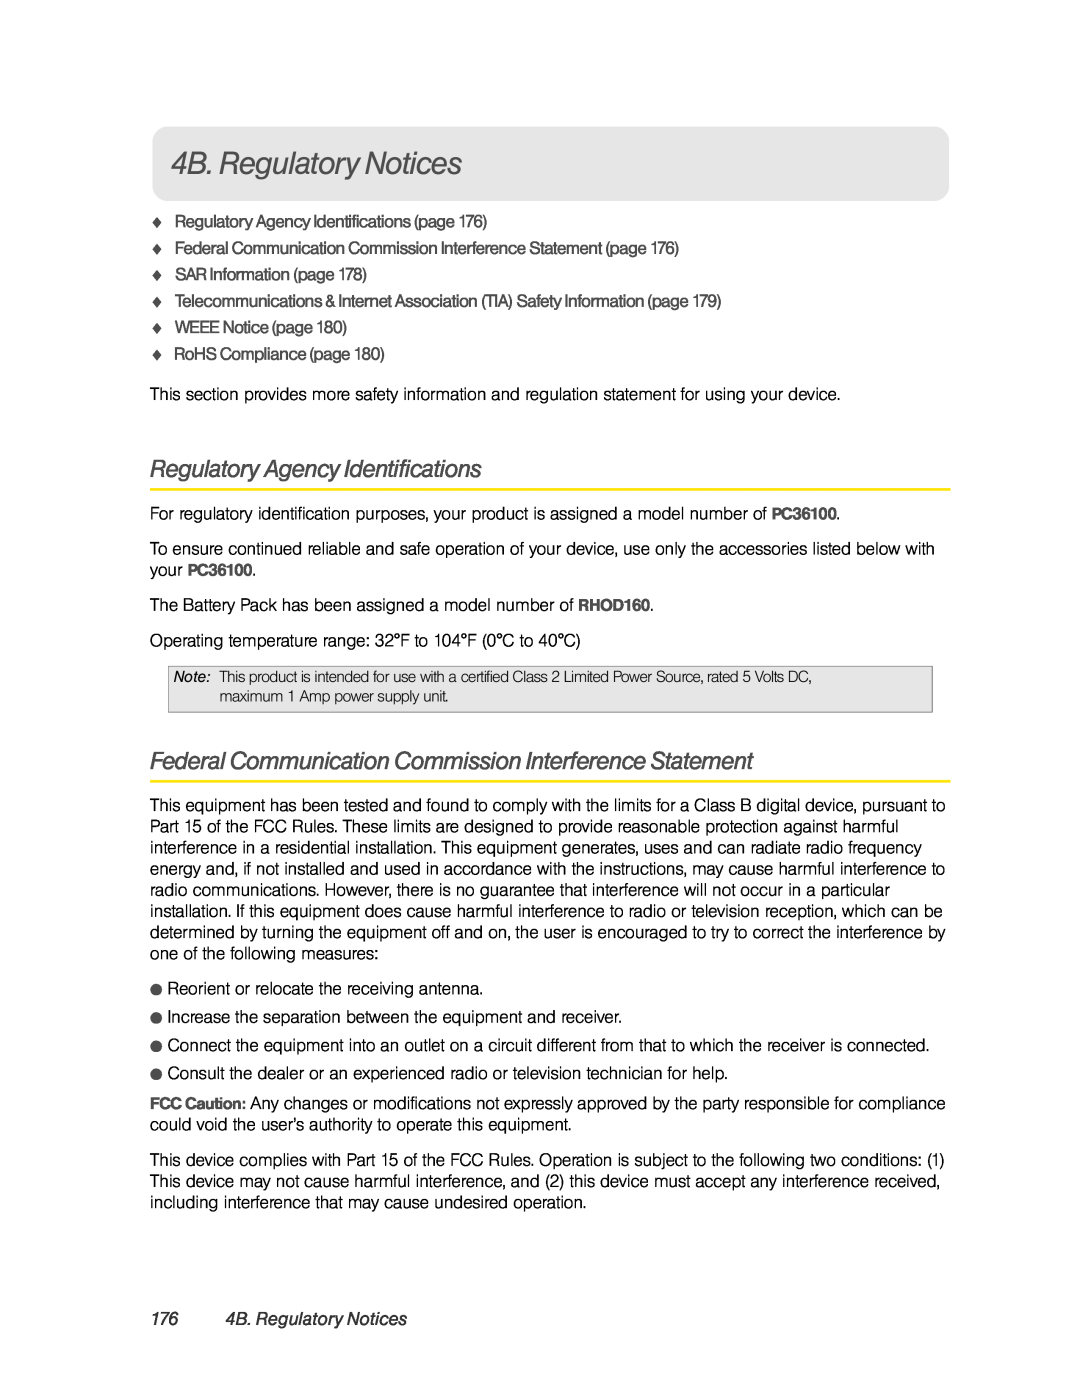 HTC PC36100 manual 176 4B. Regulatory Notices,  Regulatory Agency Identificationspage,  SAR Information page 